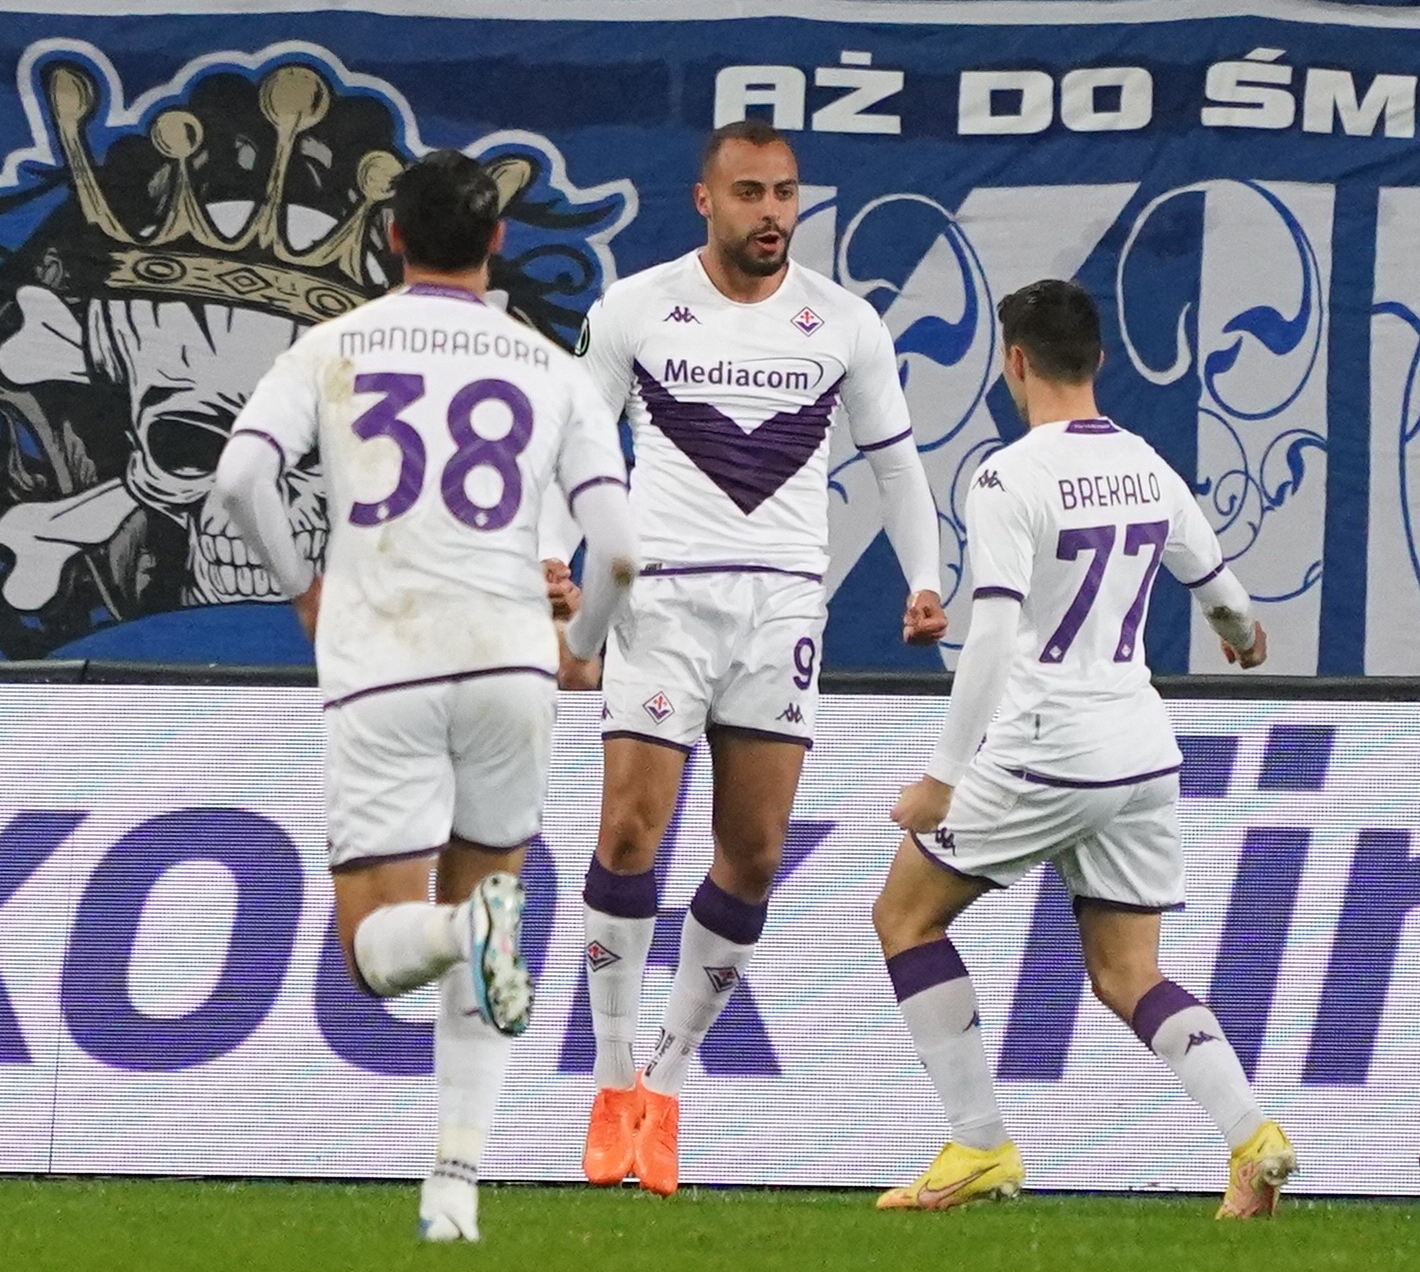 Grêmio vs São Luiz: Battle on the Field